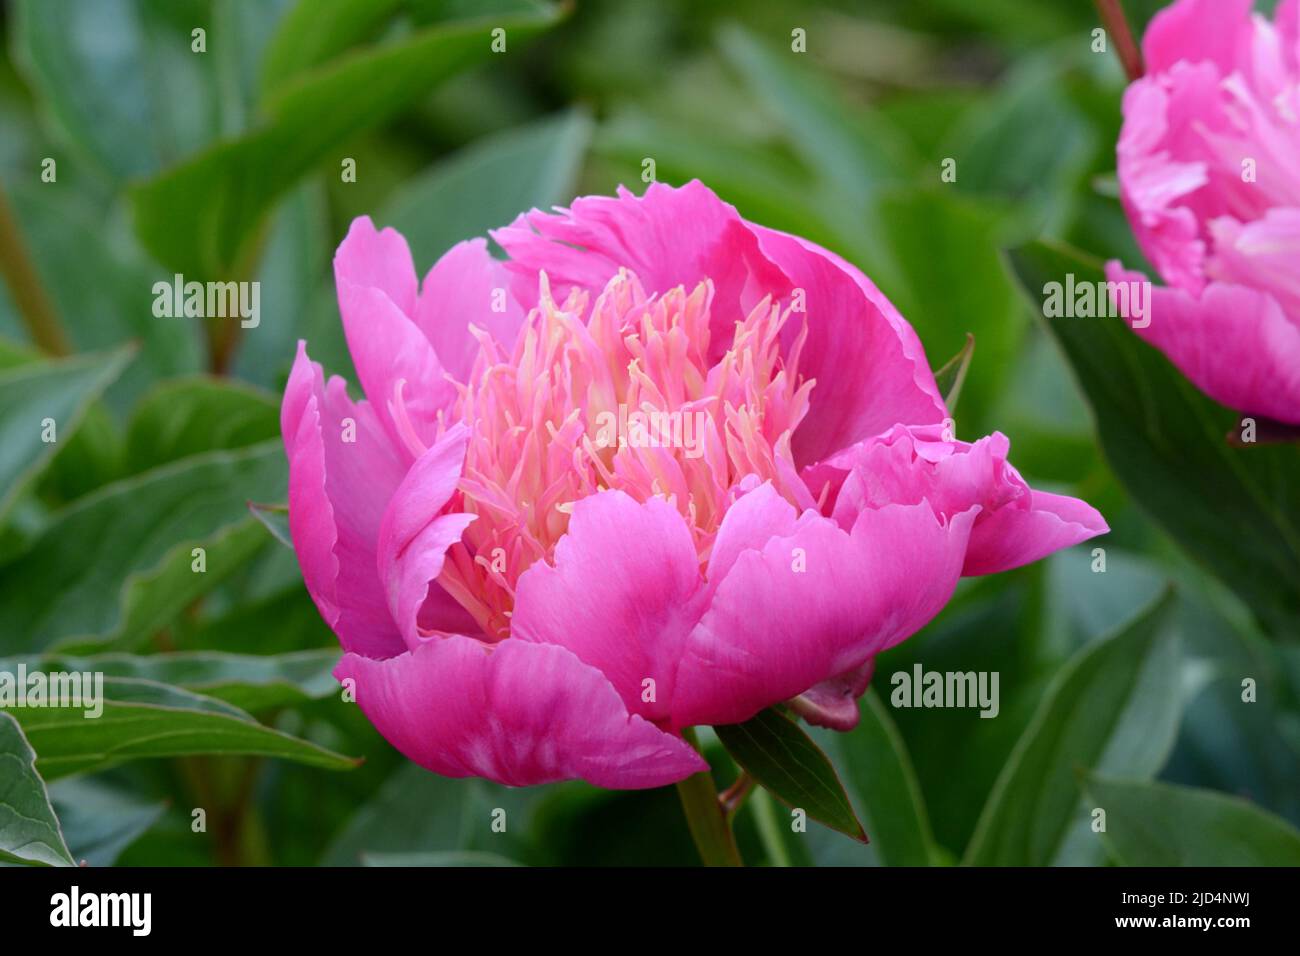 Paeonia lactiflora La Belle Helene Peony large showy bowl shaped pink bloom flower Stock Photo